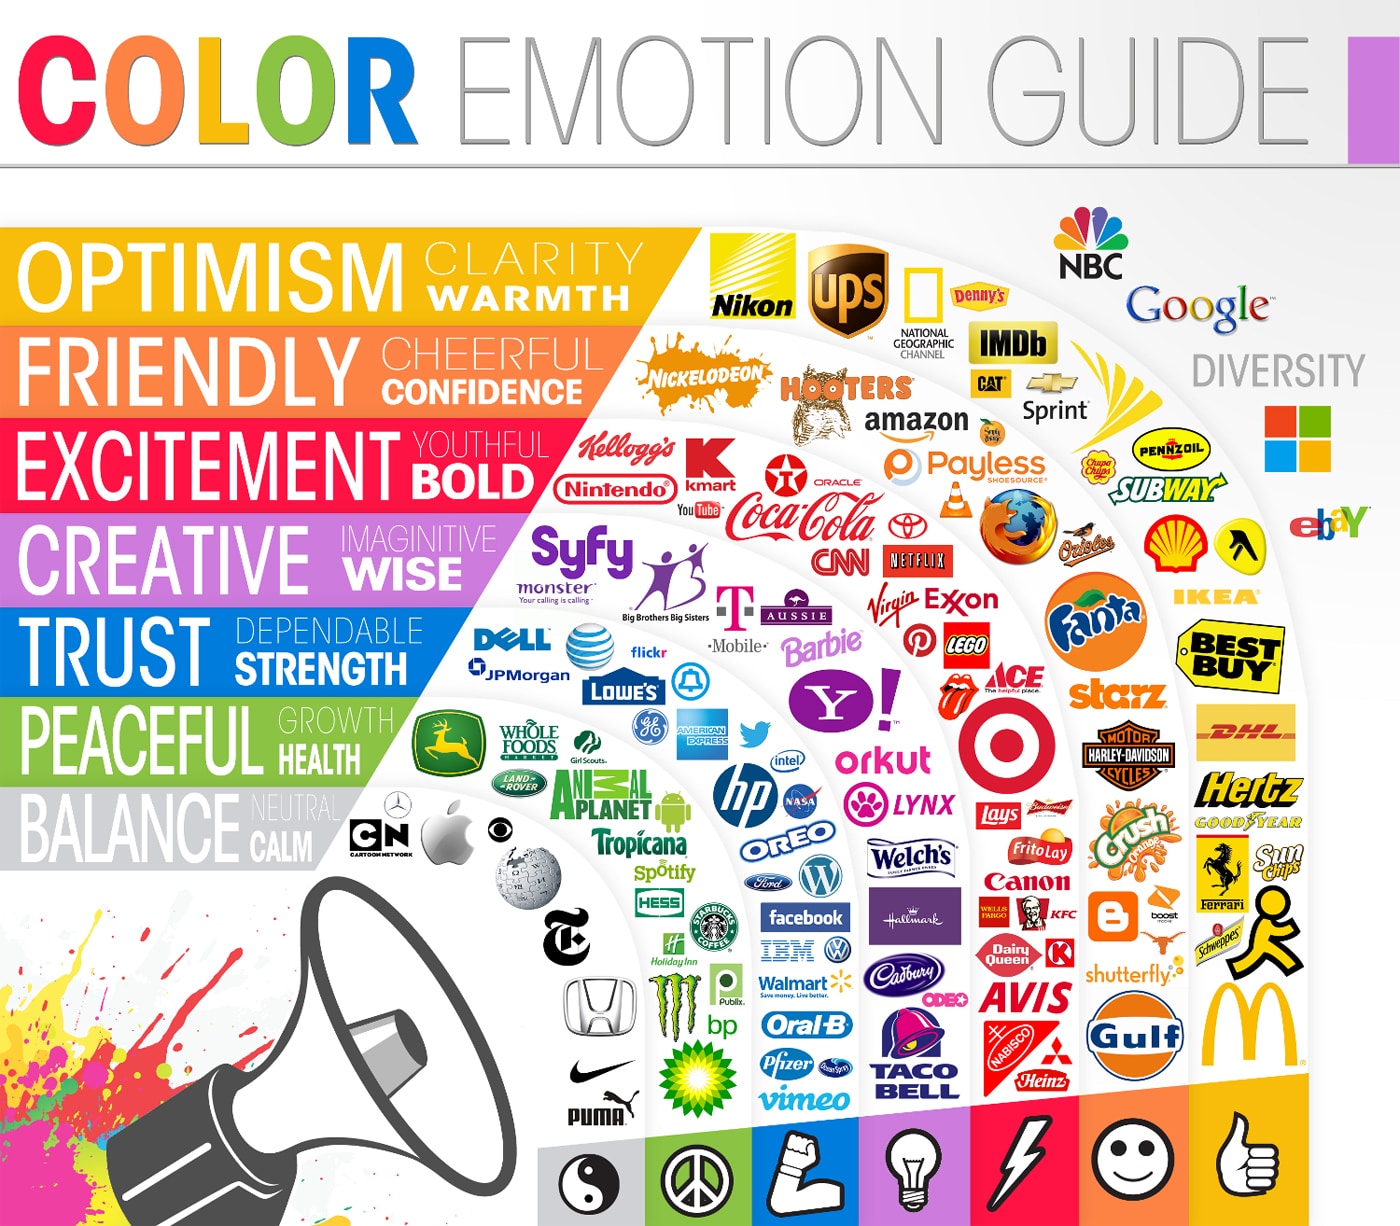 color-emotion-guide-logo-infographic